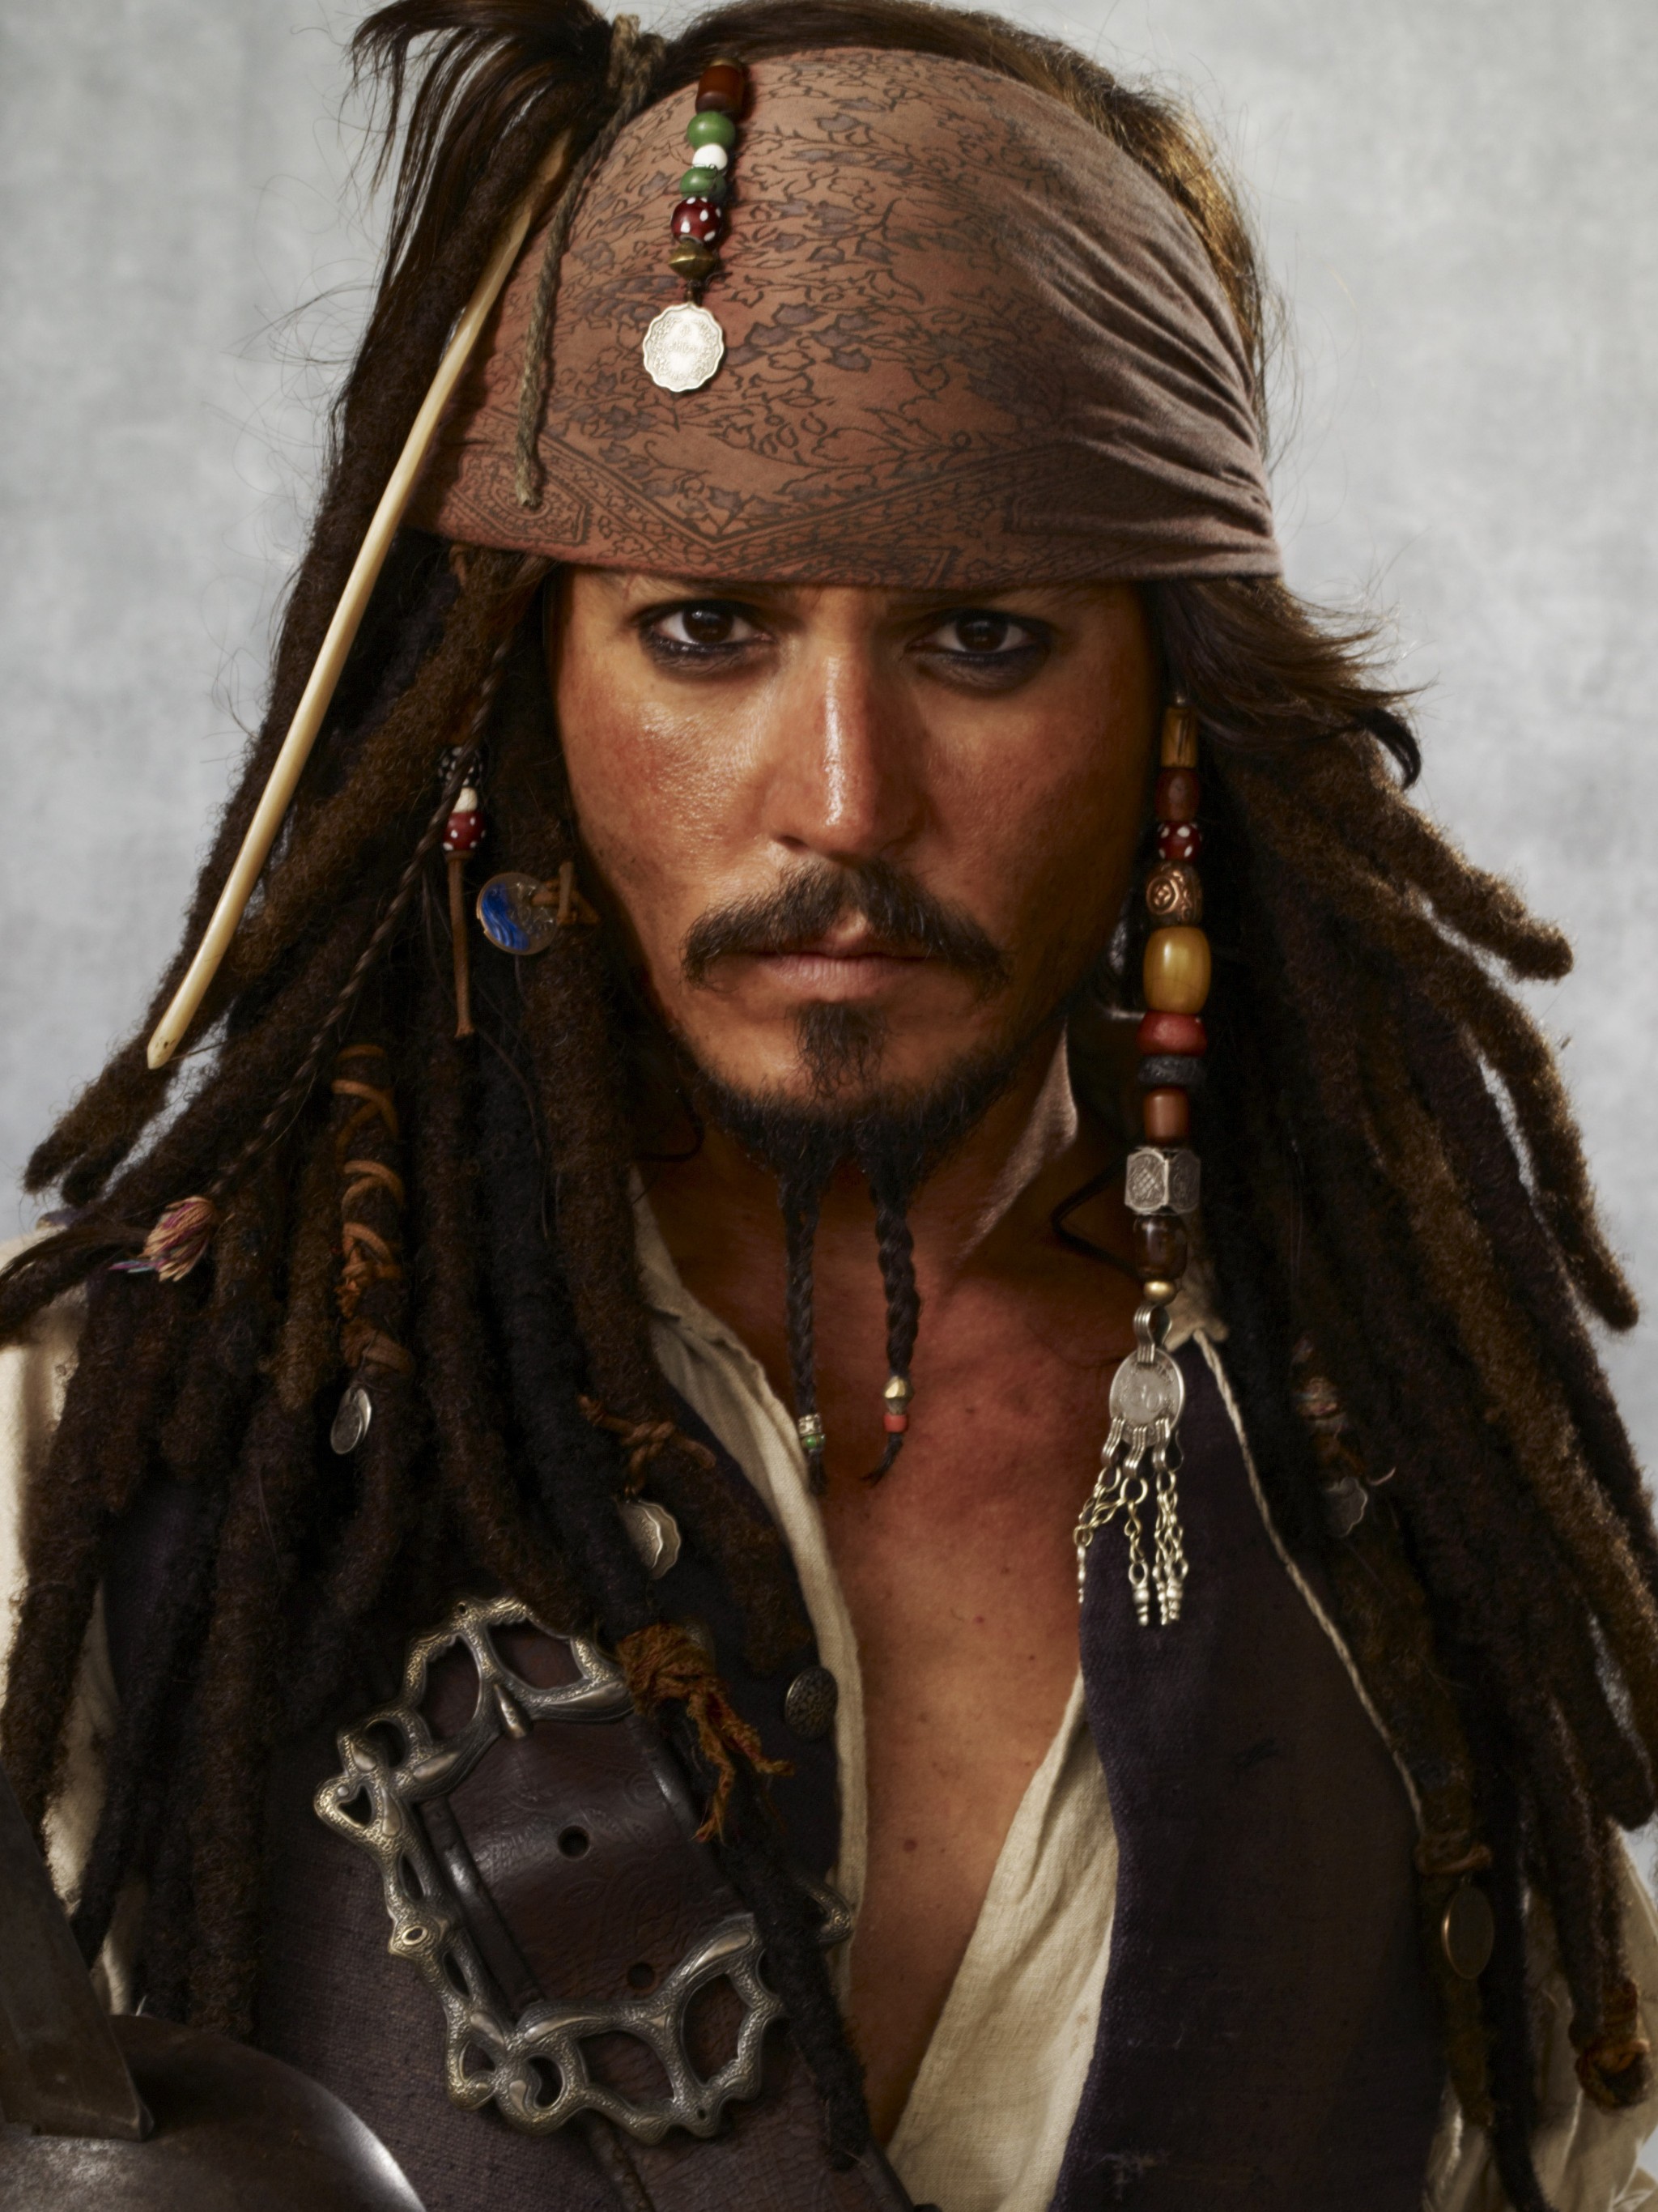 Download Jack Sparrow Action Figure Jack Sparrow And Johnny Depp 240937 Hd Wallpaper Backgrounds Download